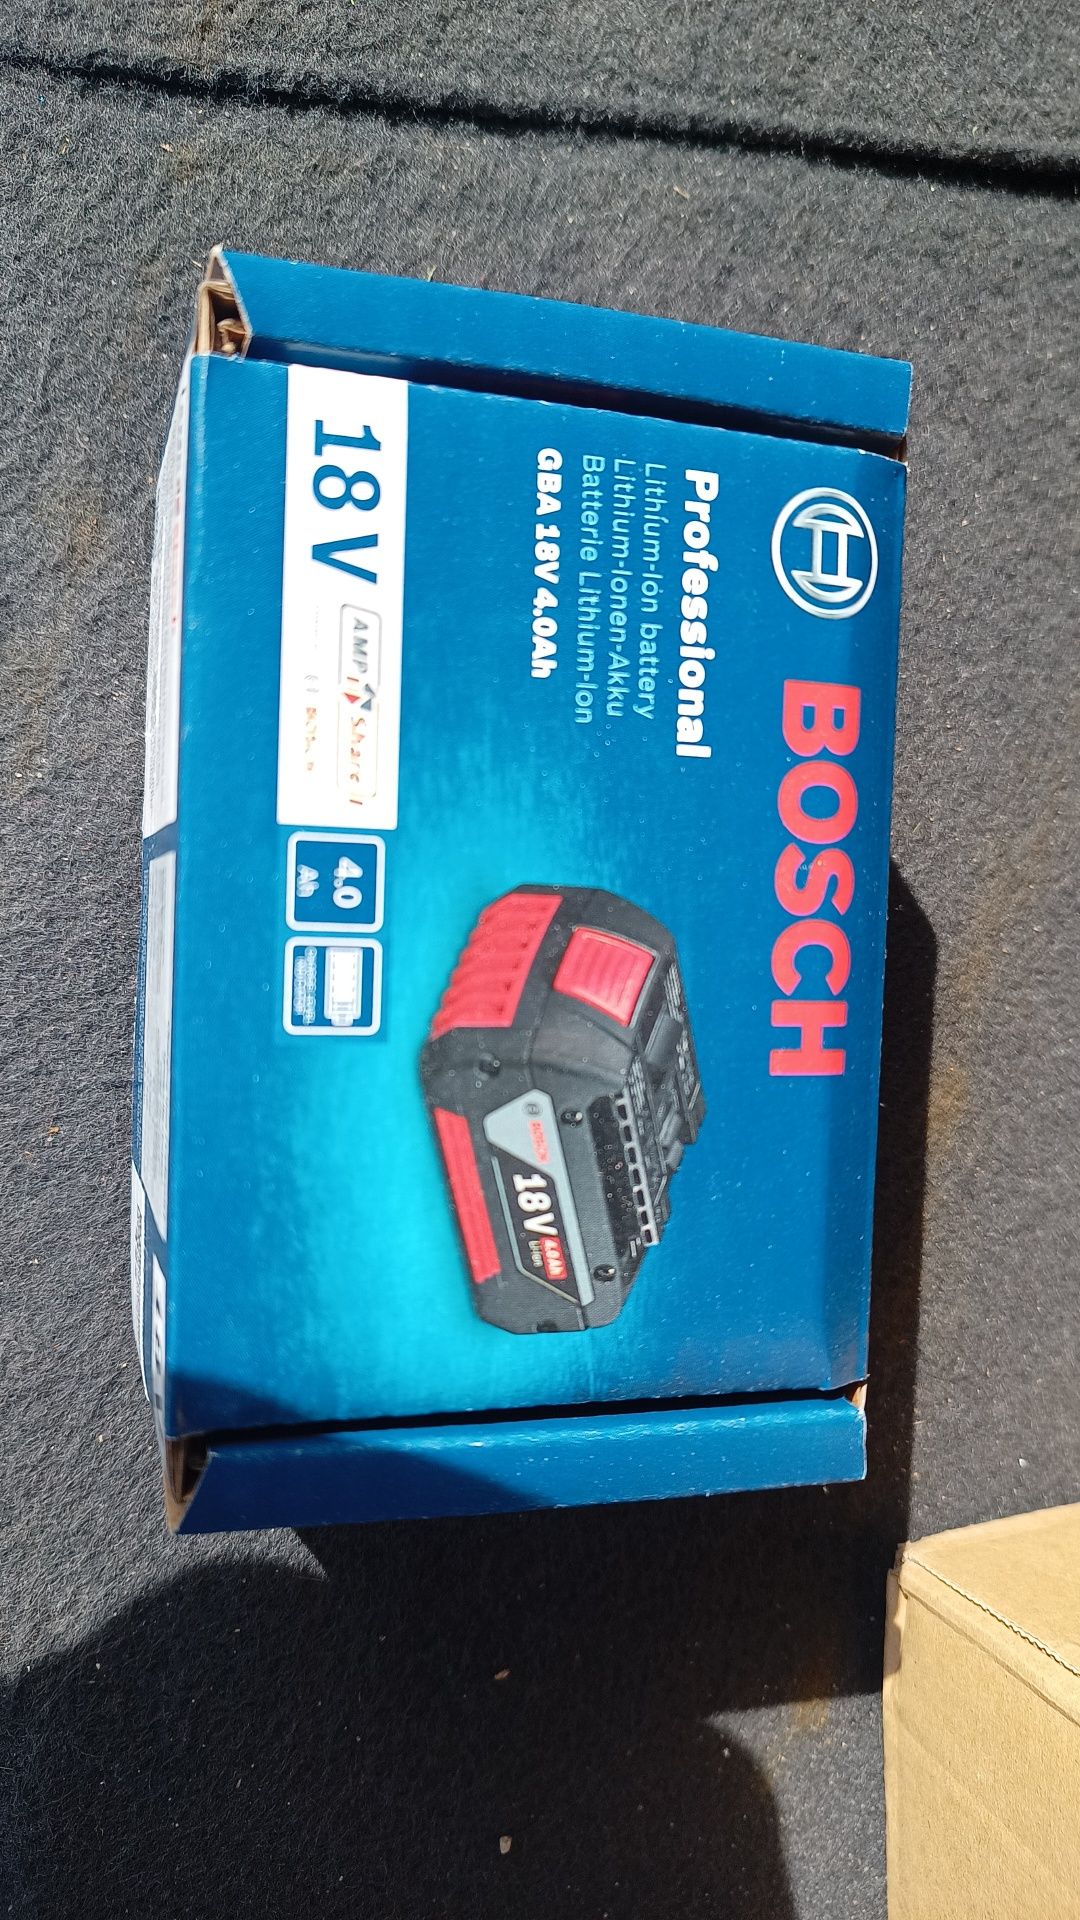 Sprzedam baterię Bosch 18v 4ah, 6ah, 8ah pro core i 12 ah pro core